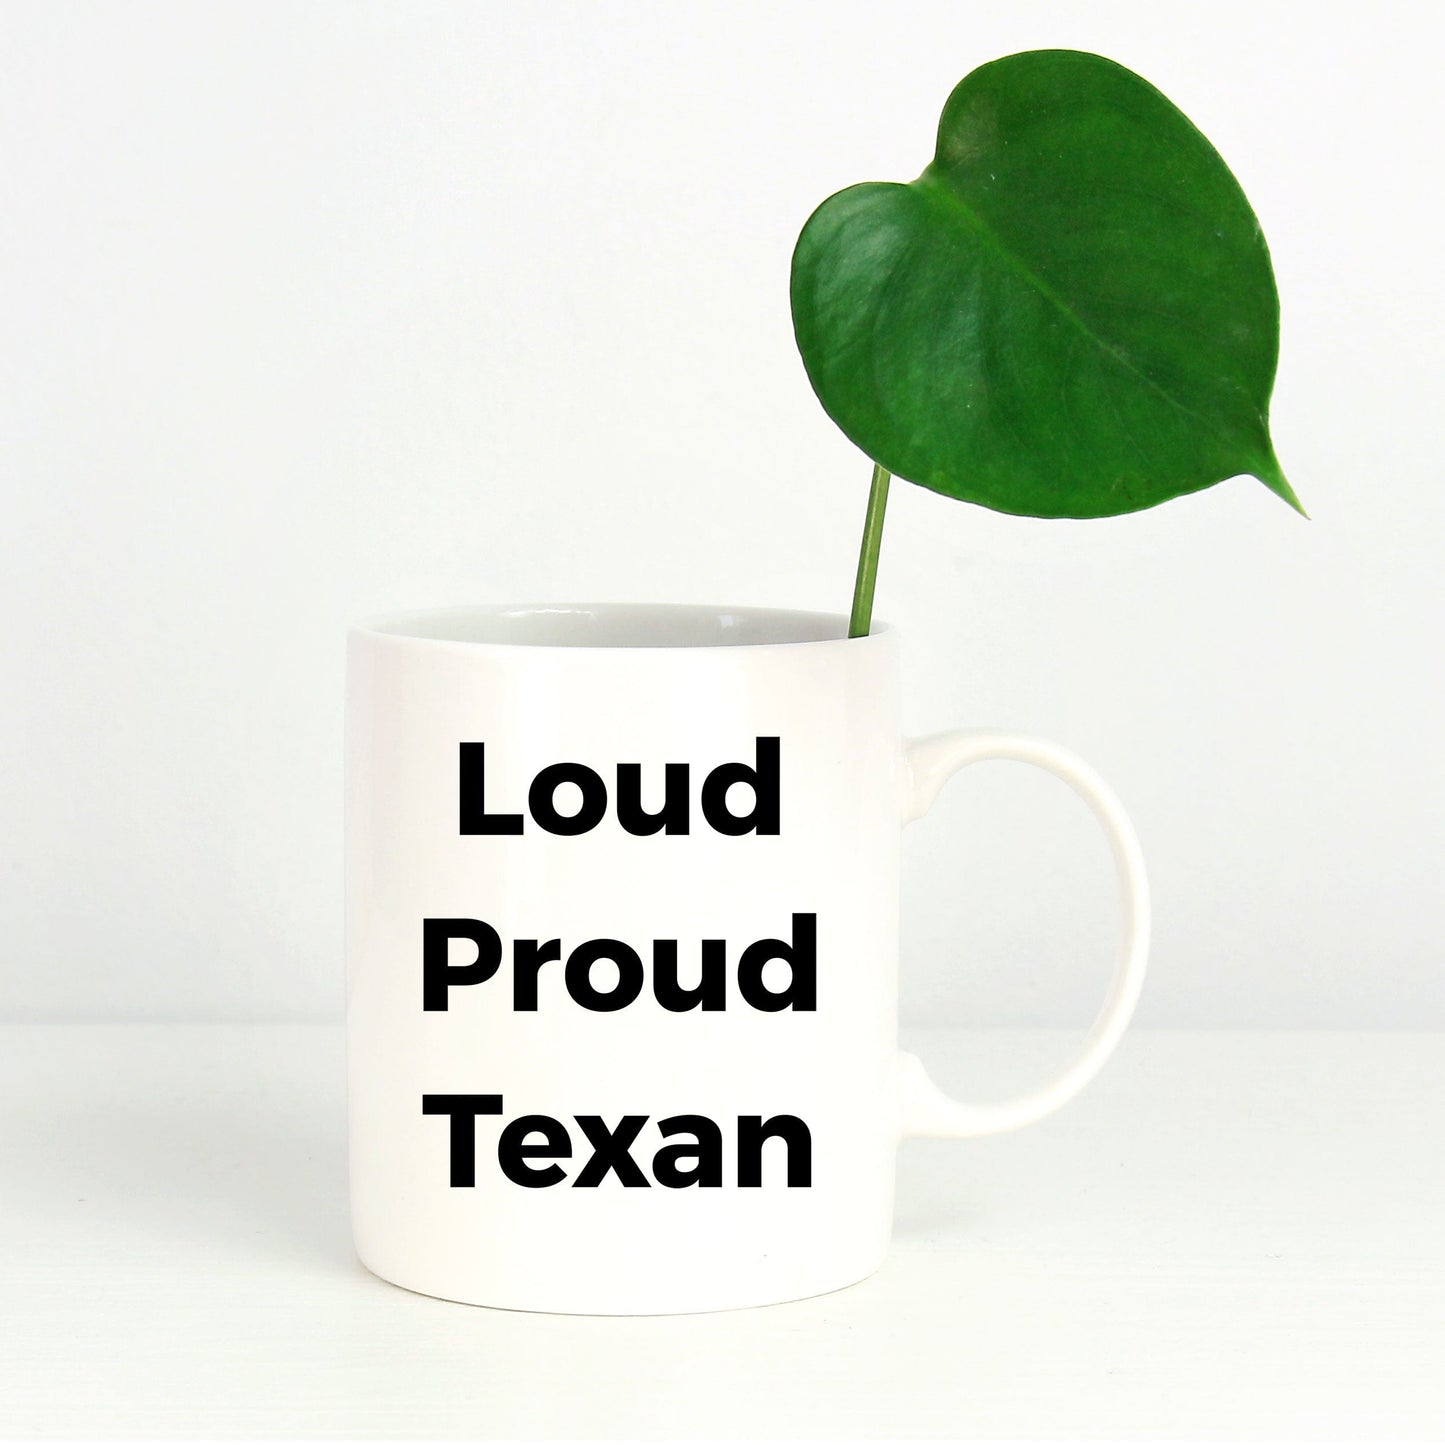 Loud Proud Texan Ceramic Coffee Mug